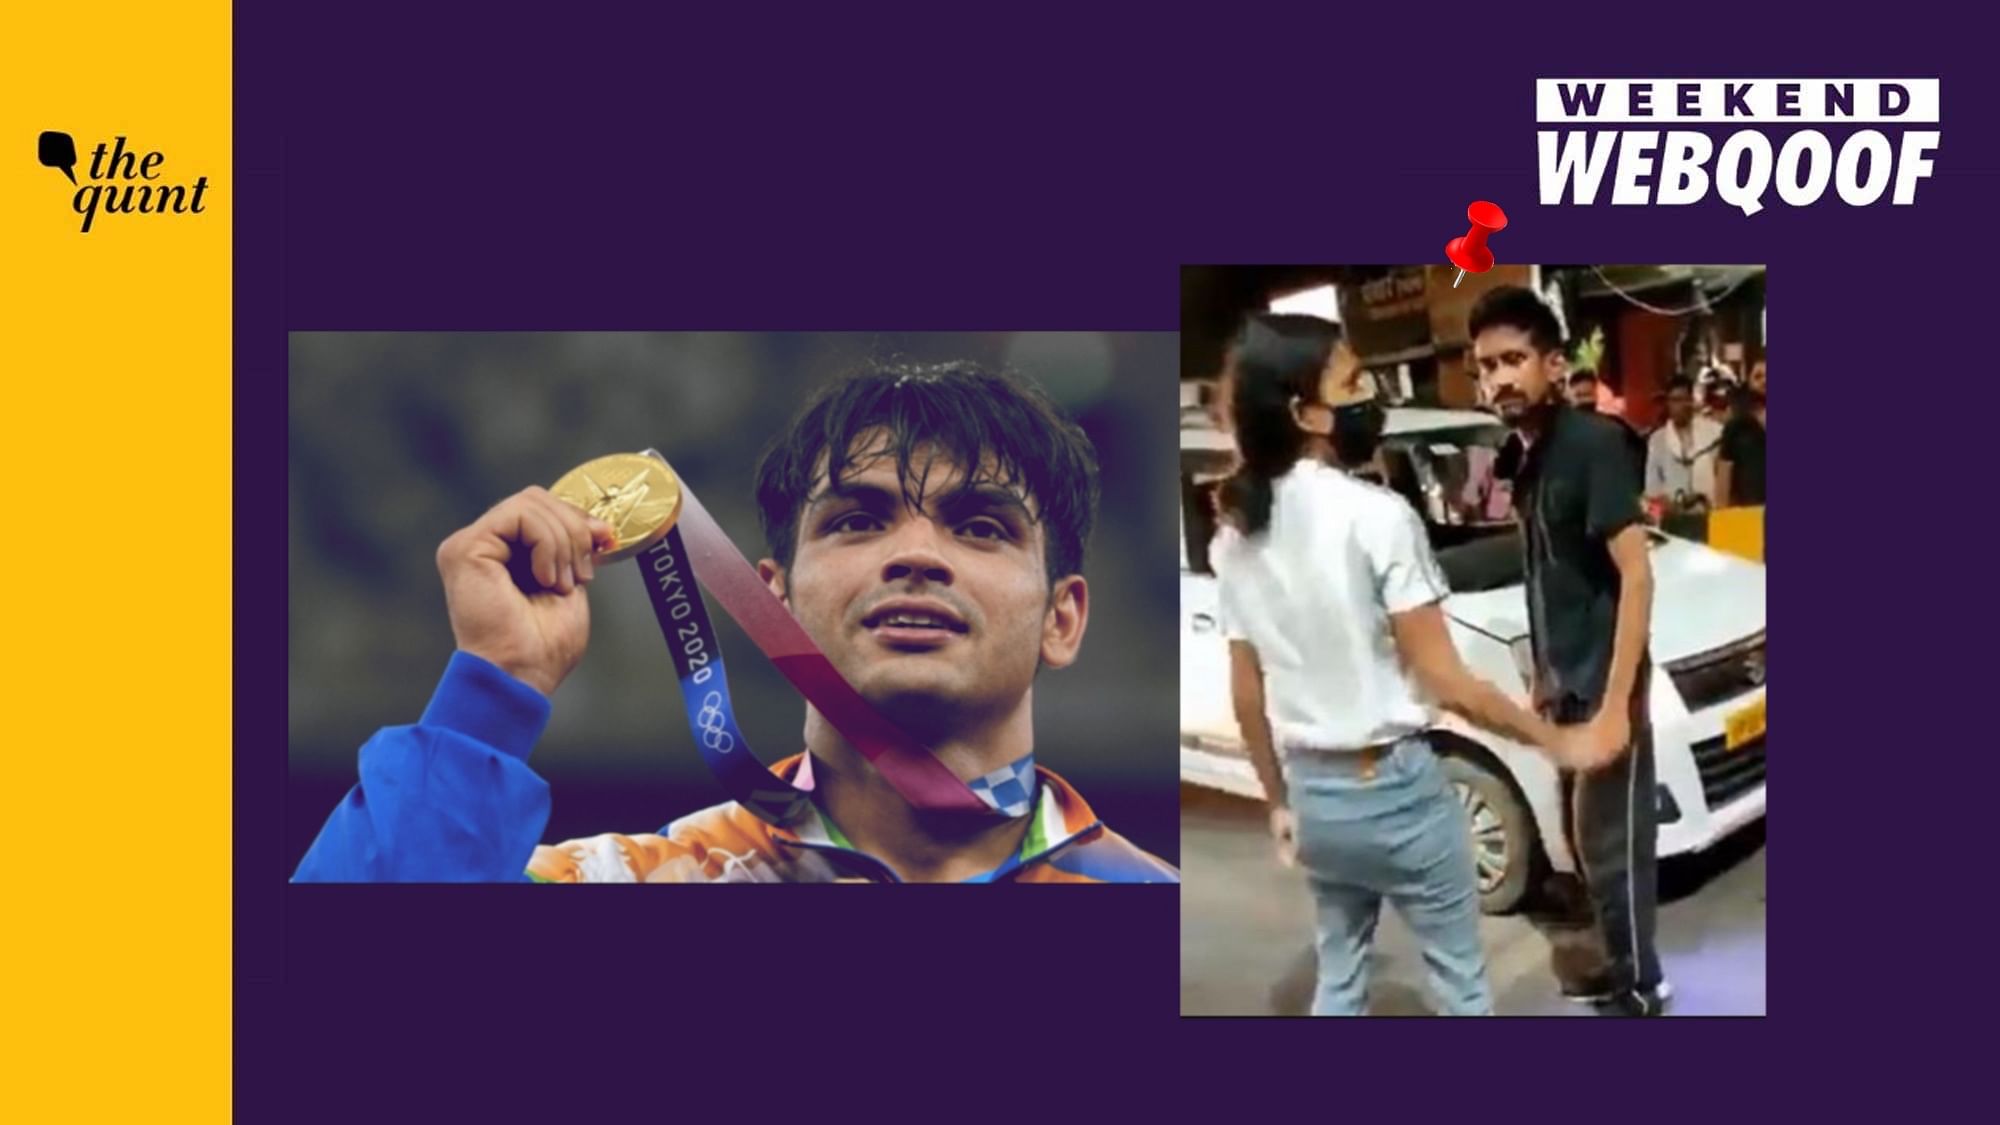 <div class="paragraphs"><p>From misformation around gold medallist Neeraj Chopra to 2020 Tokyo Olympics.</p></div>